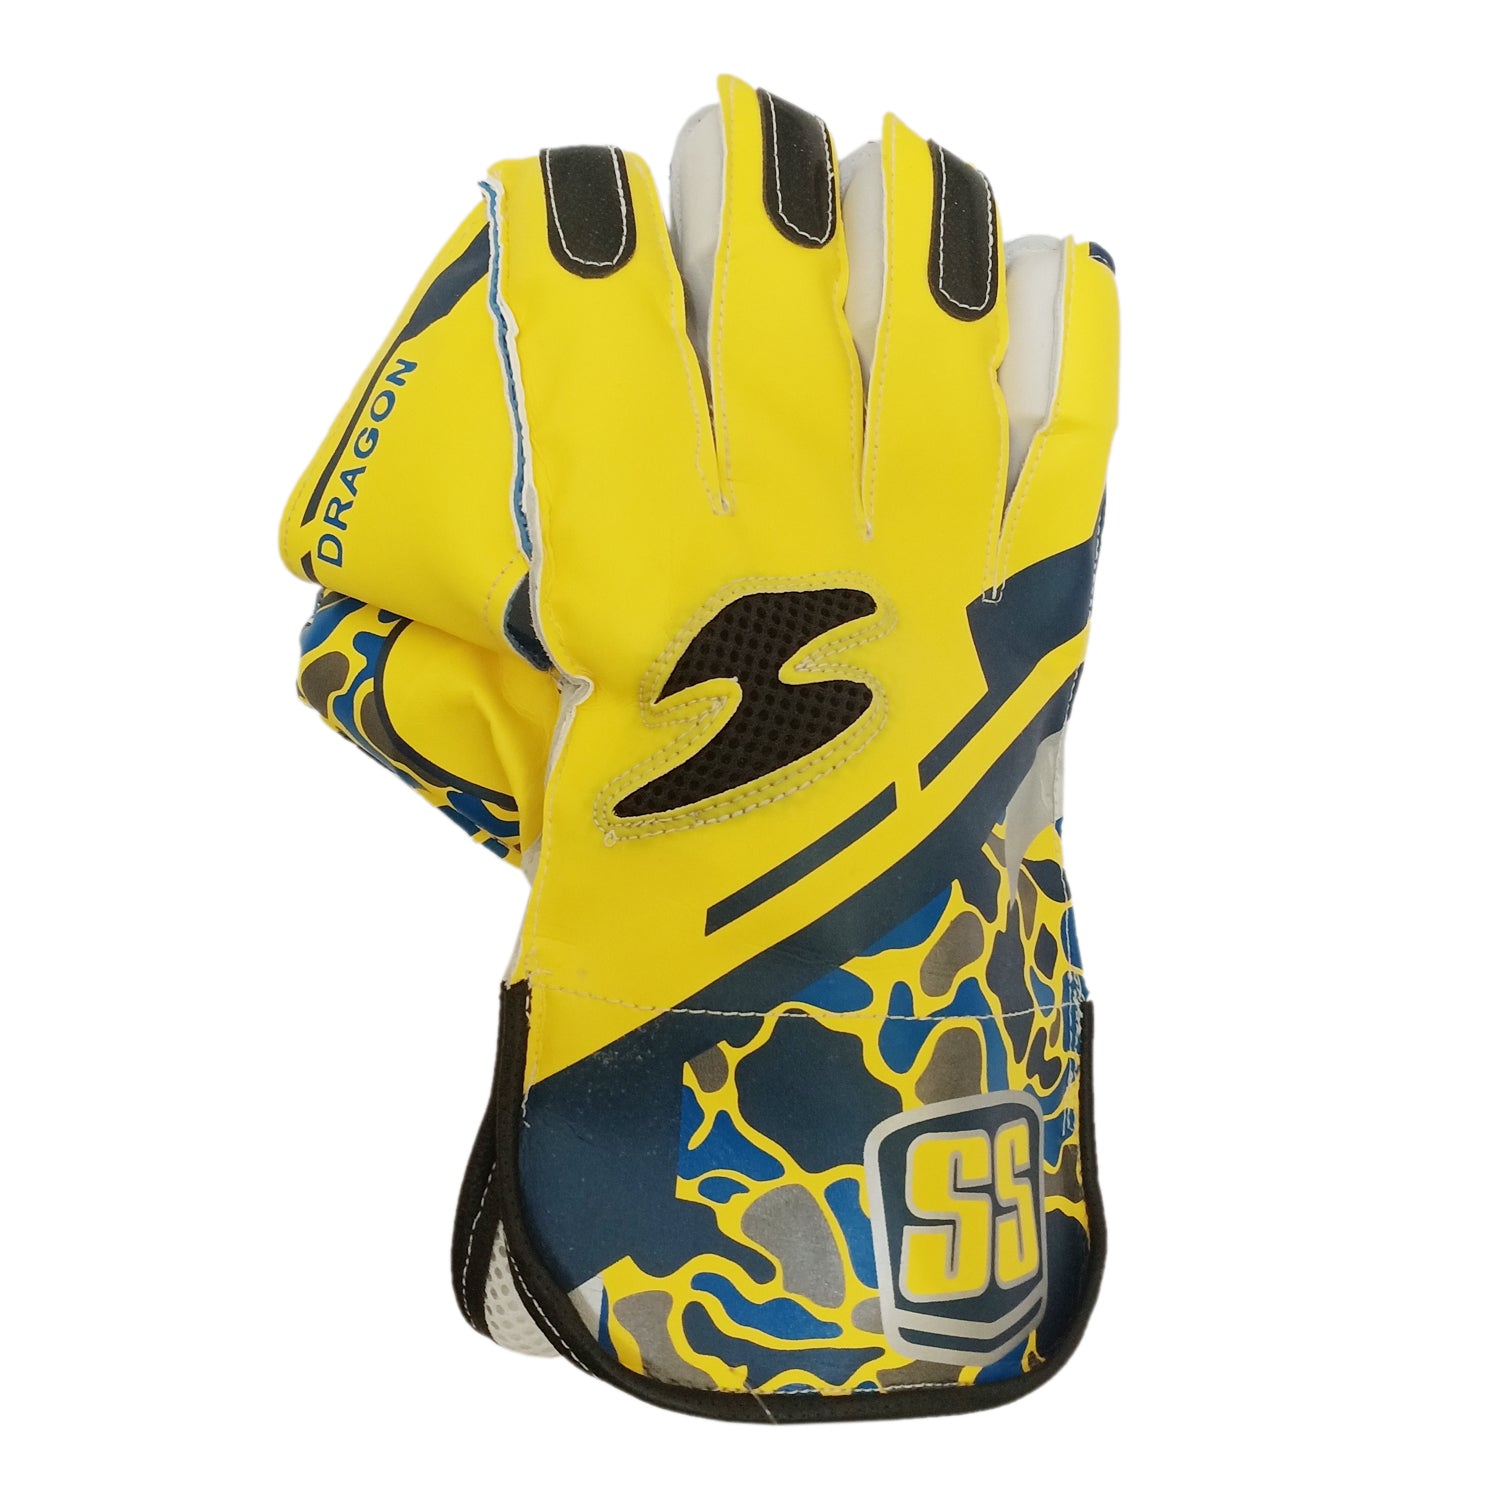 SS Dragon Wicket Keeping Gloves - Best Price online Prokicksports.com